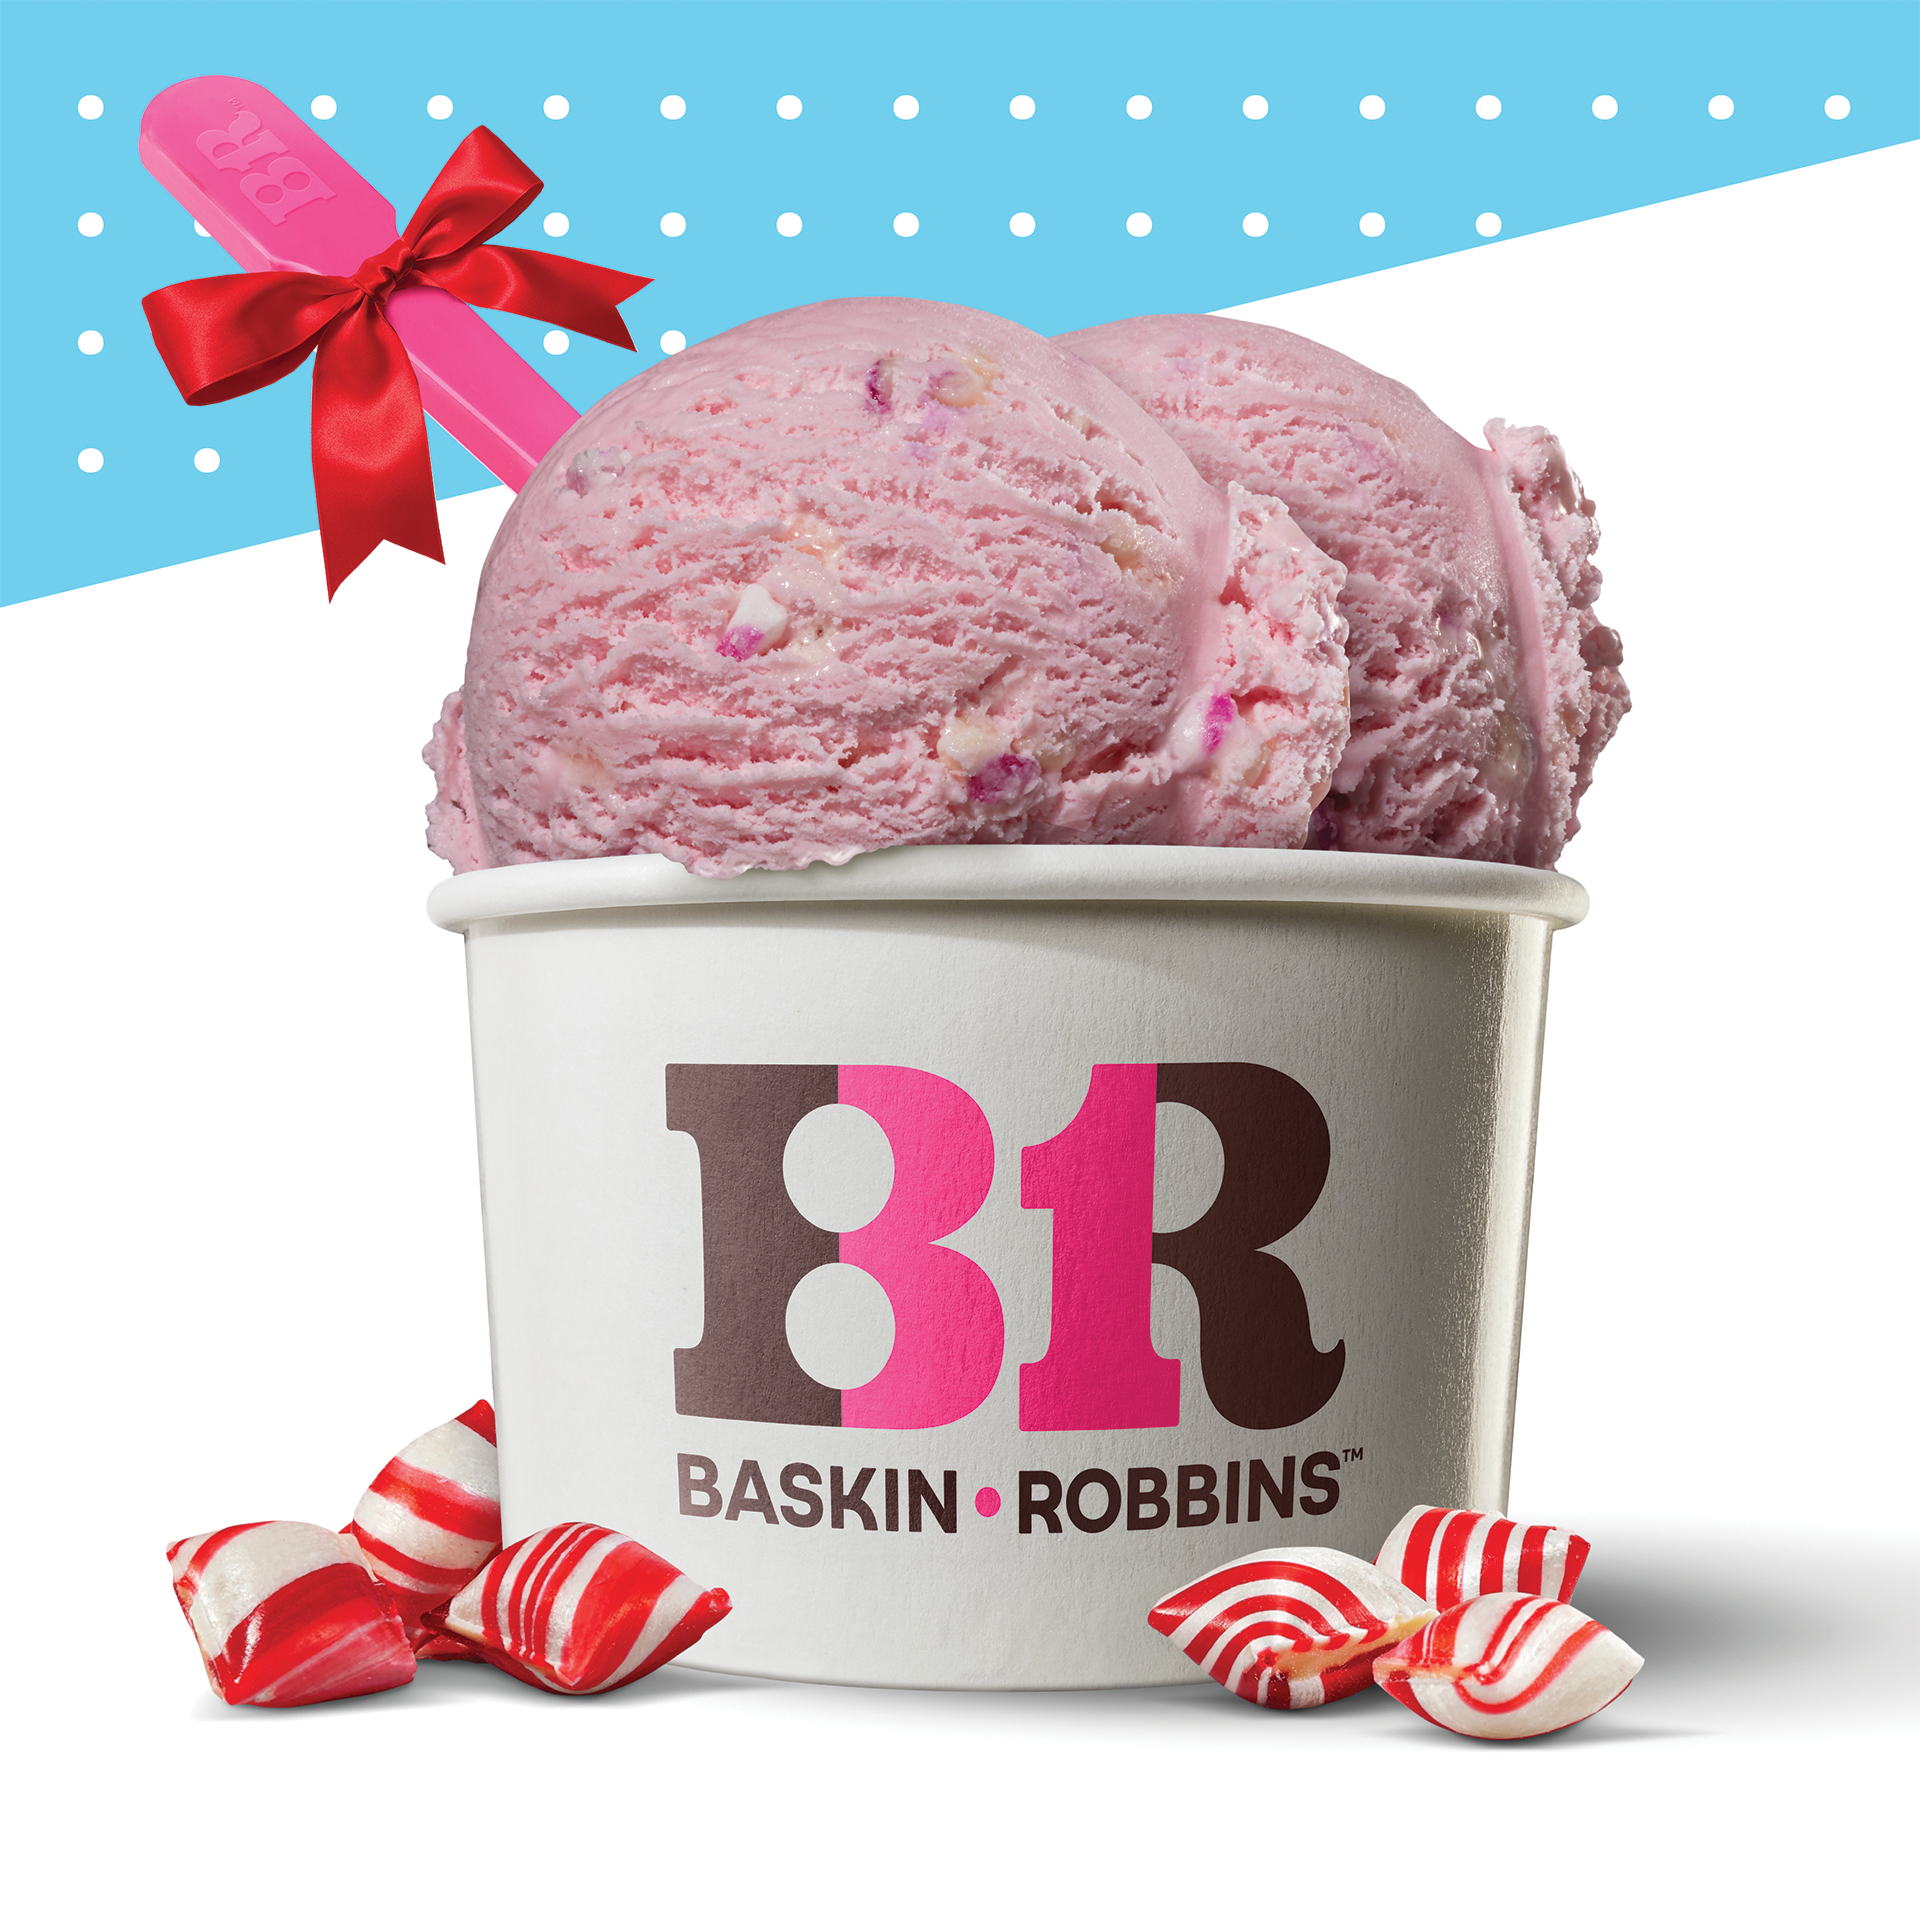 Baskin-Robbins Turkey Cake and Turkey Day Fixin's Flavored Ice Cream